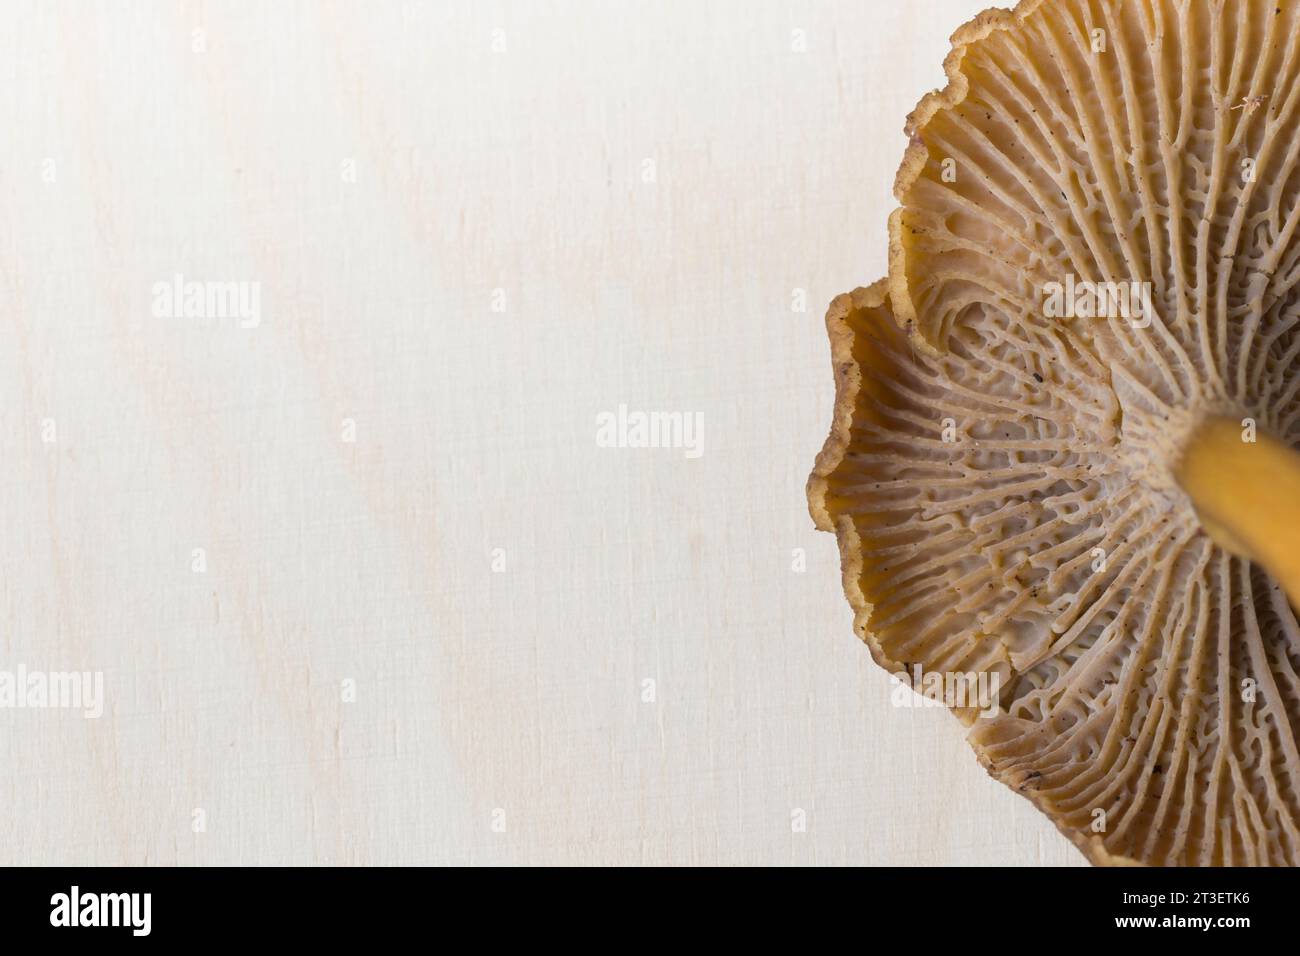 Craterellus cornucopioides, or horn of plenty, trumpet chanterelle mushroom, edible on wooden background. Stock Photo